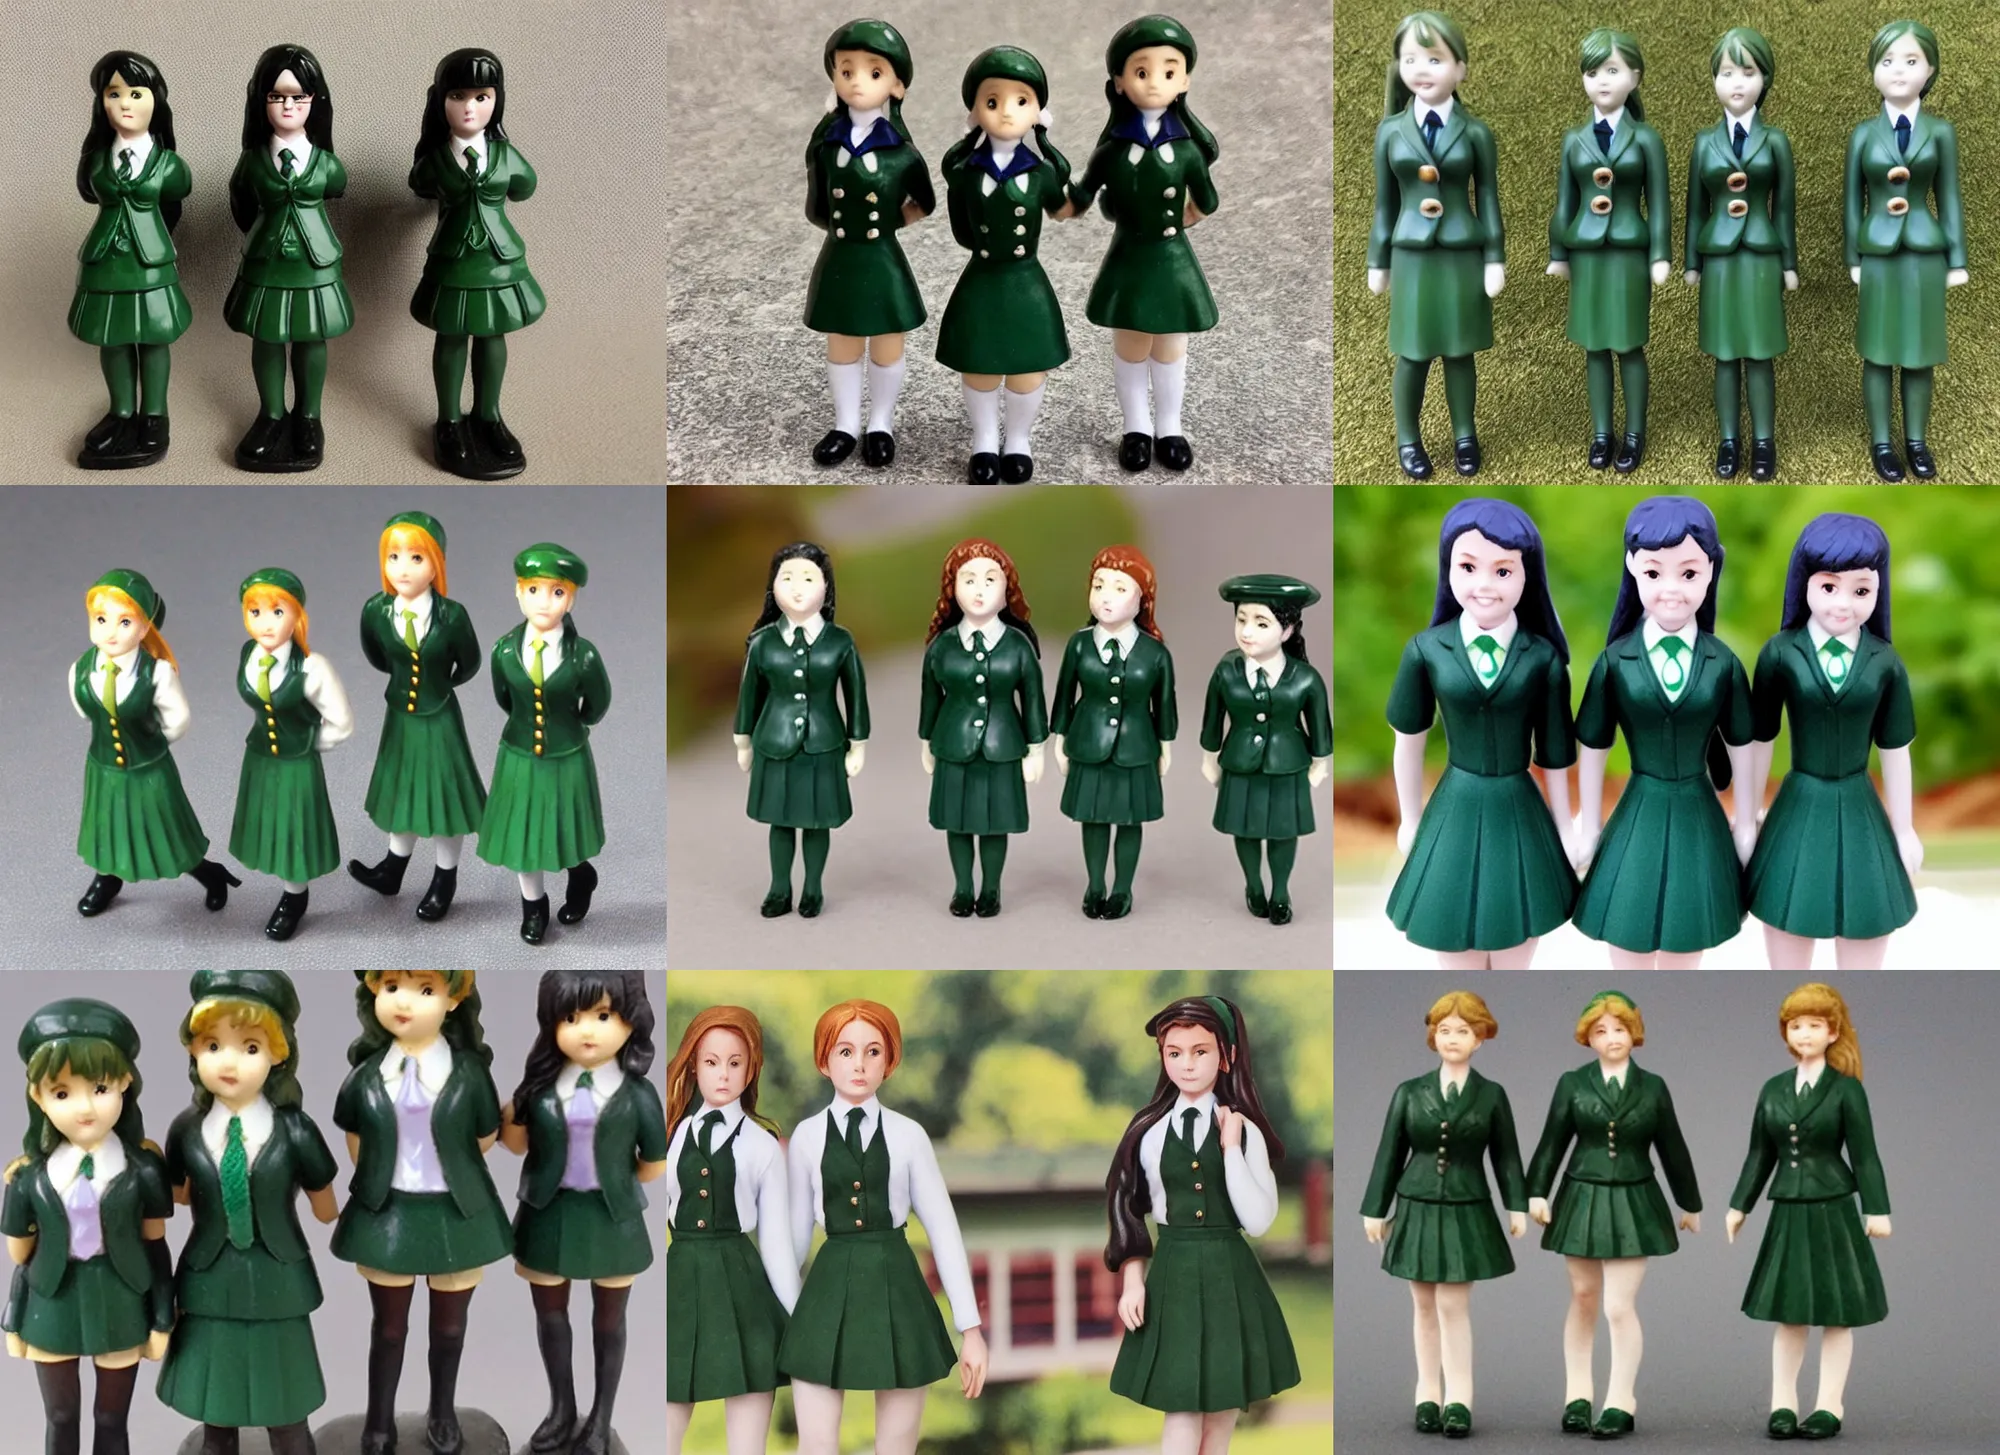 Prompt: Image on the store website, eBay, Full body, 80mm resin detailed miniature of three school girls in deep green school uniforms